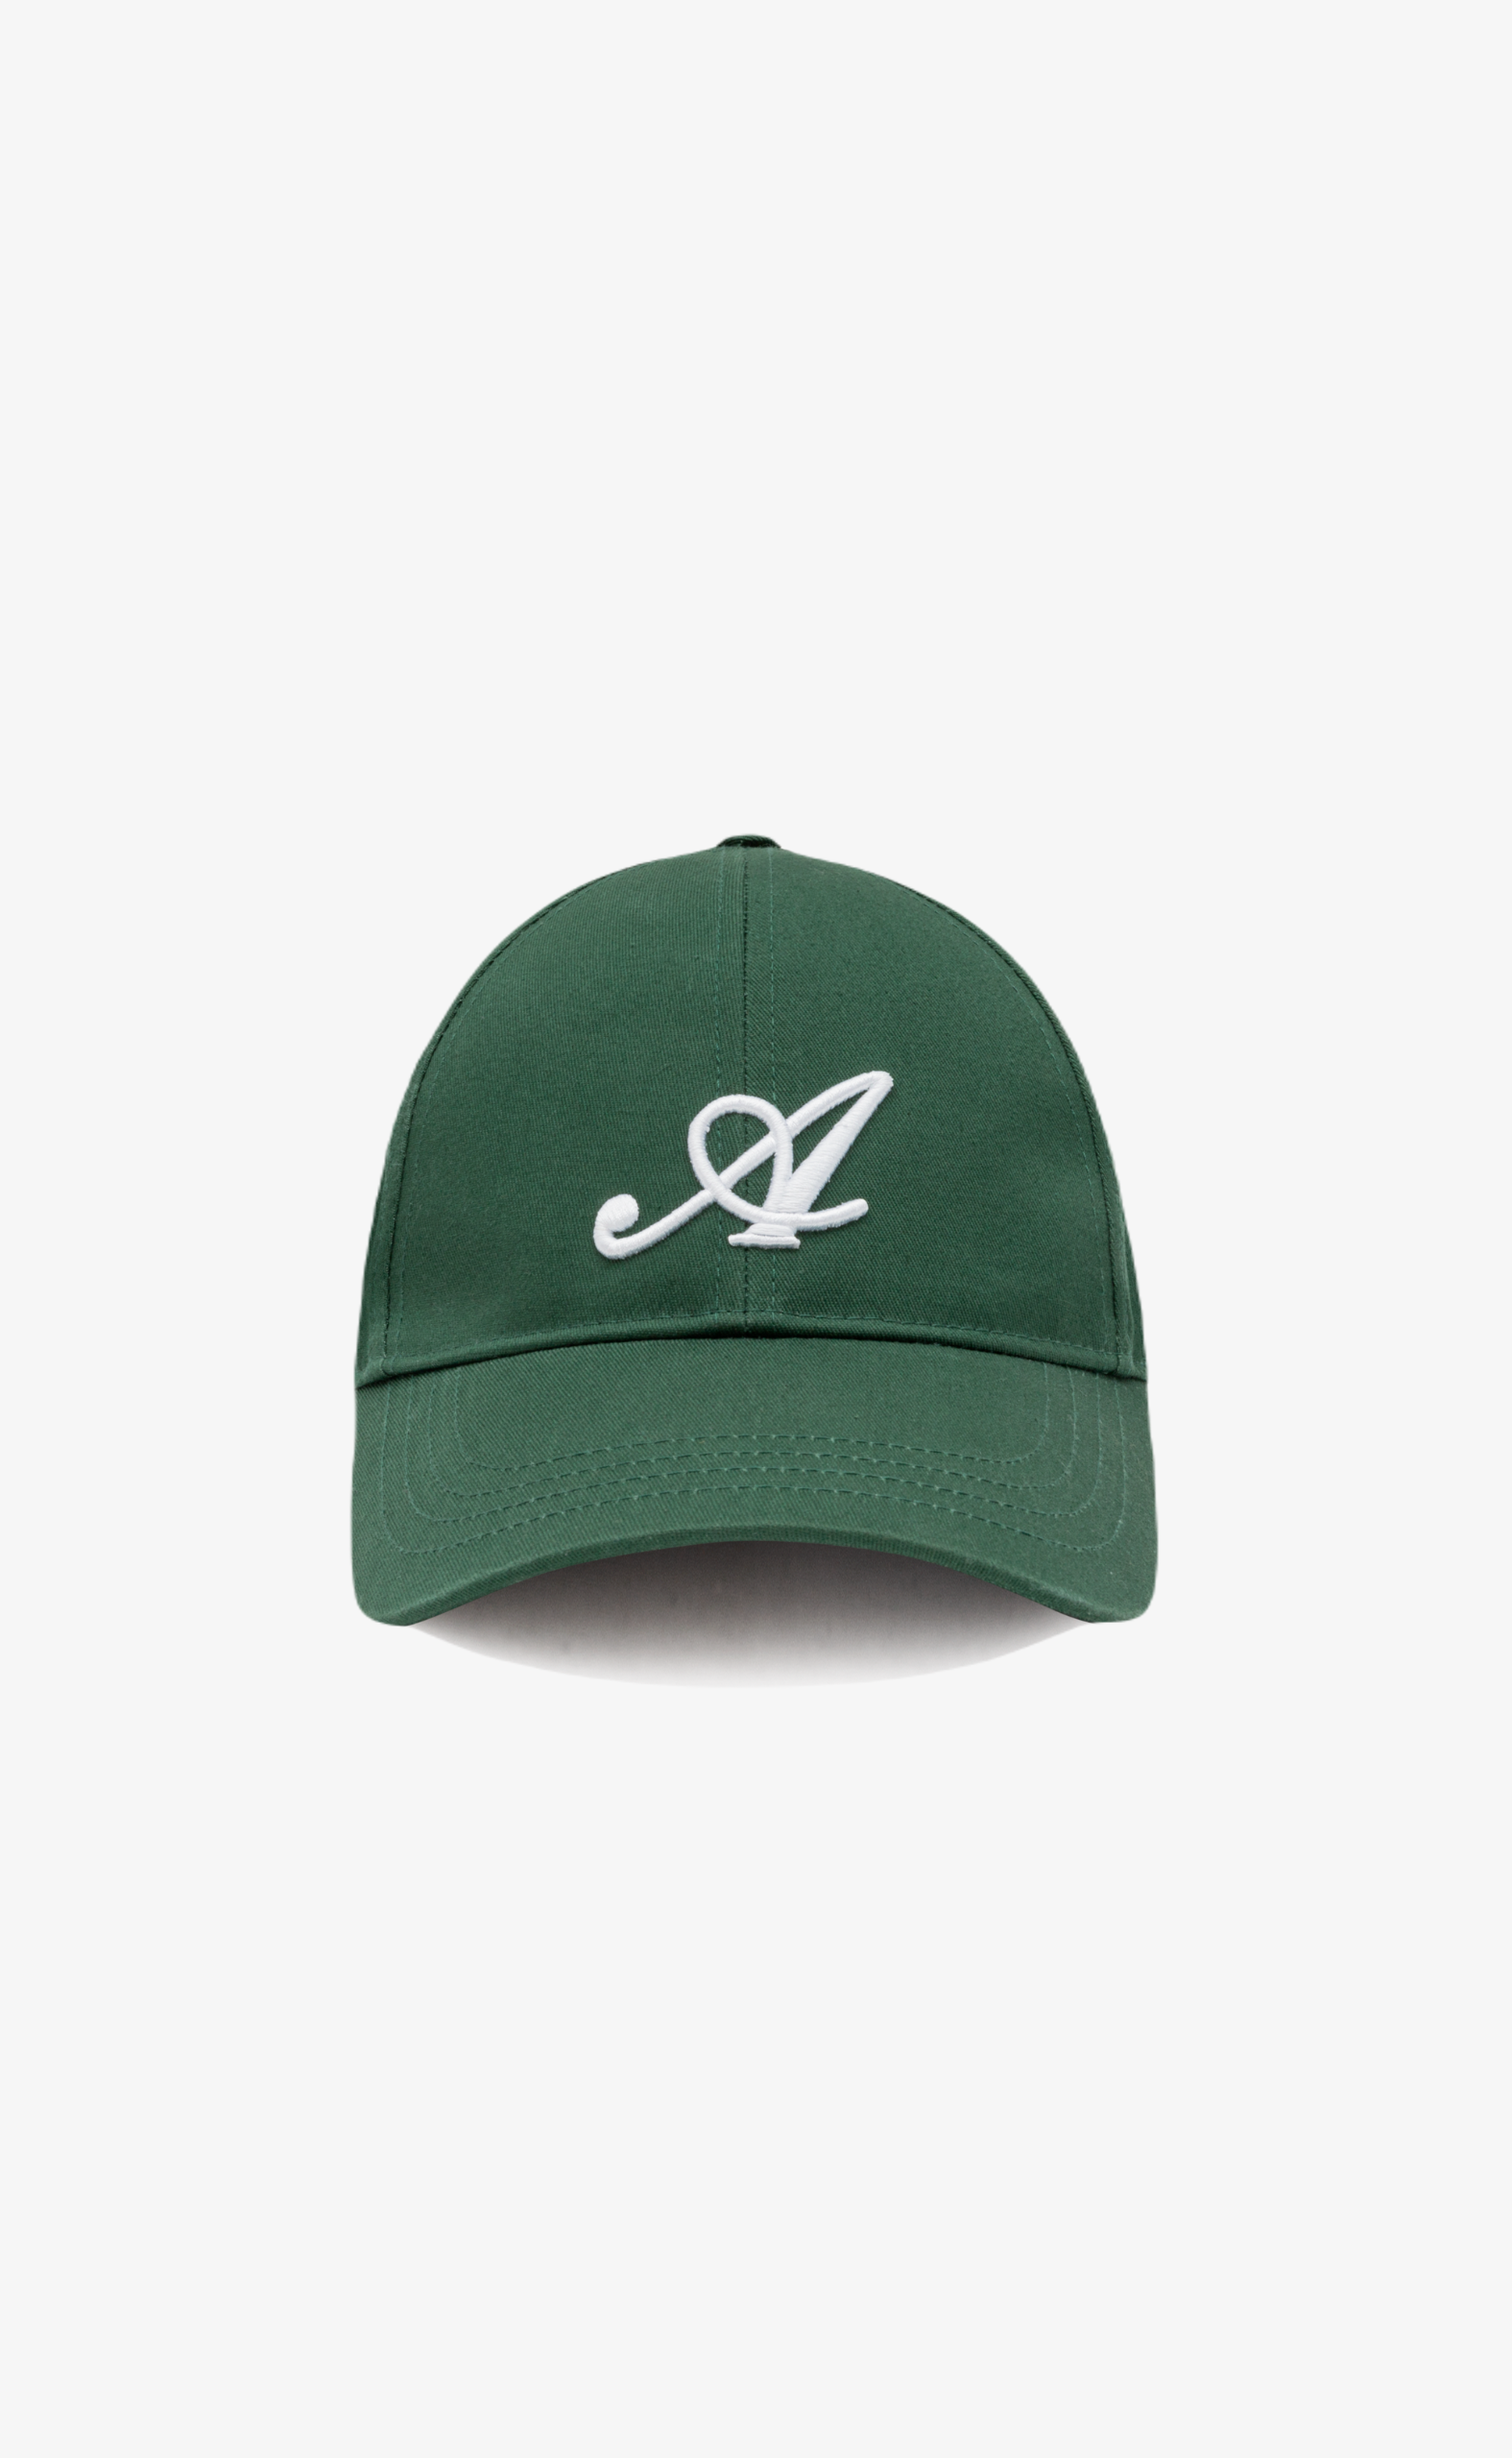 SIGNATURE COLLEGE GREEN HAT